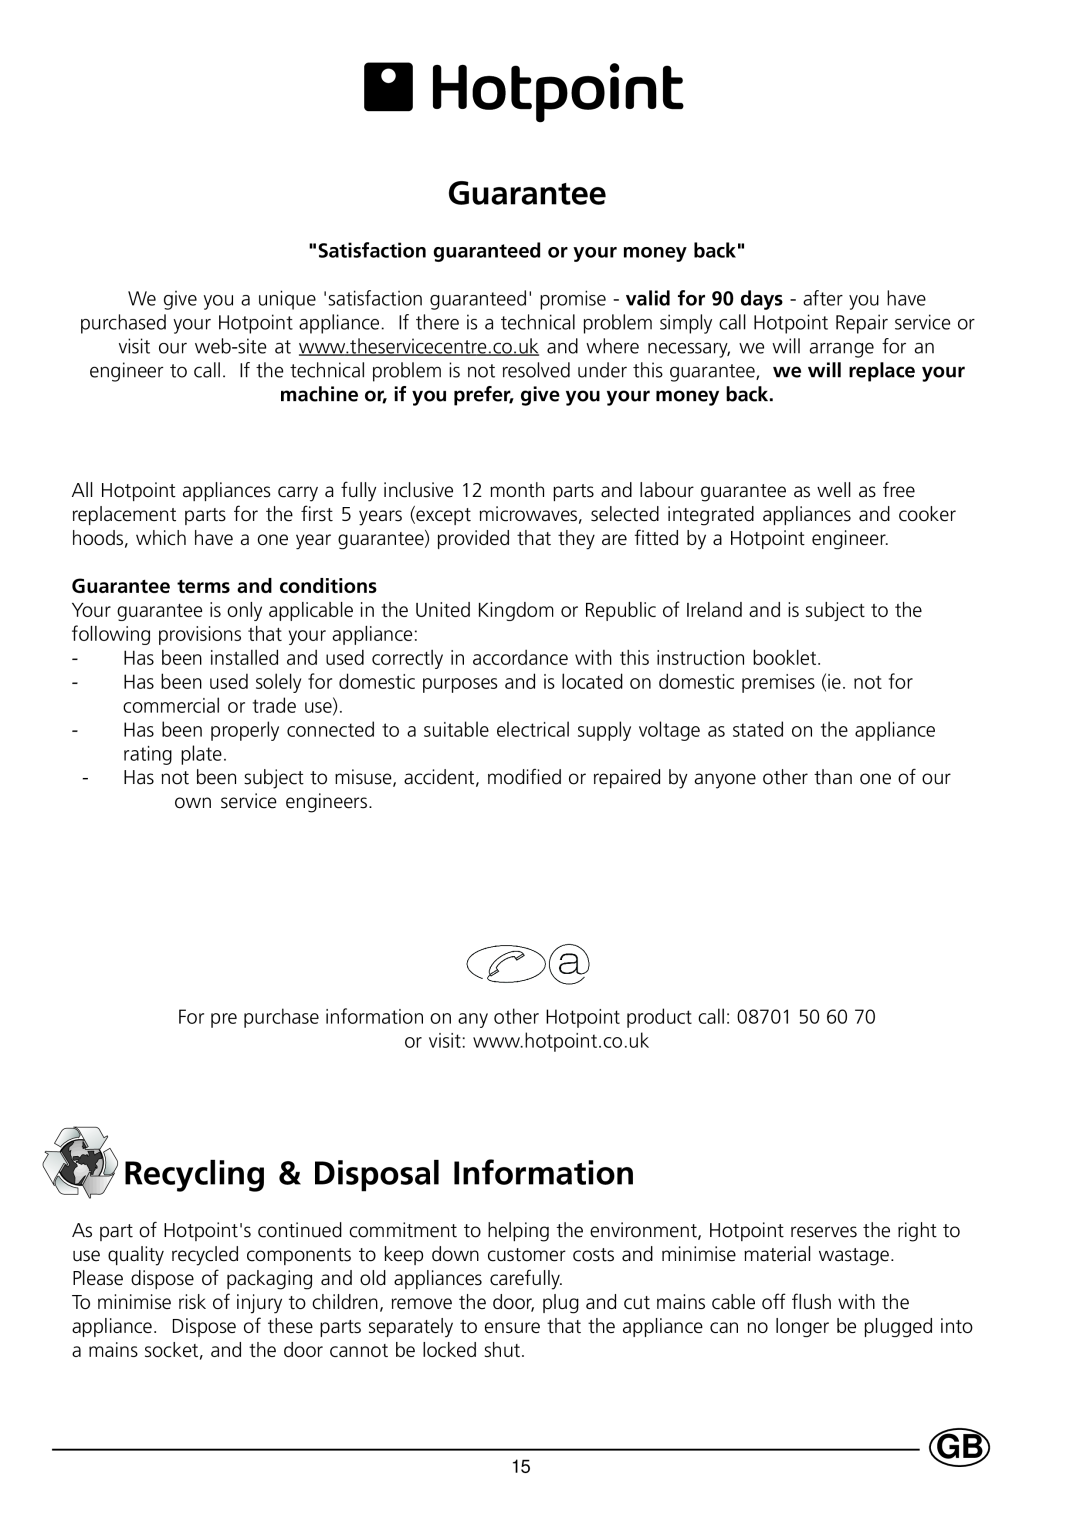 Hotpoint HUT161I manual Guarantee, Recycling & Disposal Information, Satisfaction guaranteed or your money back 